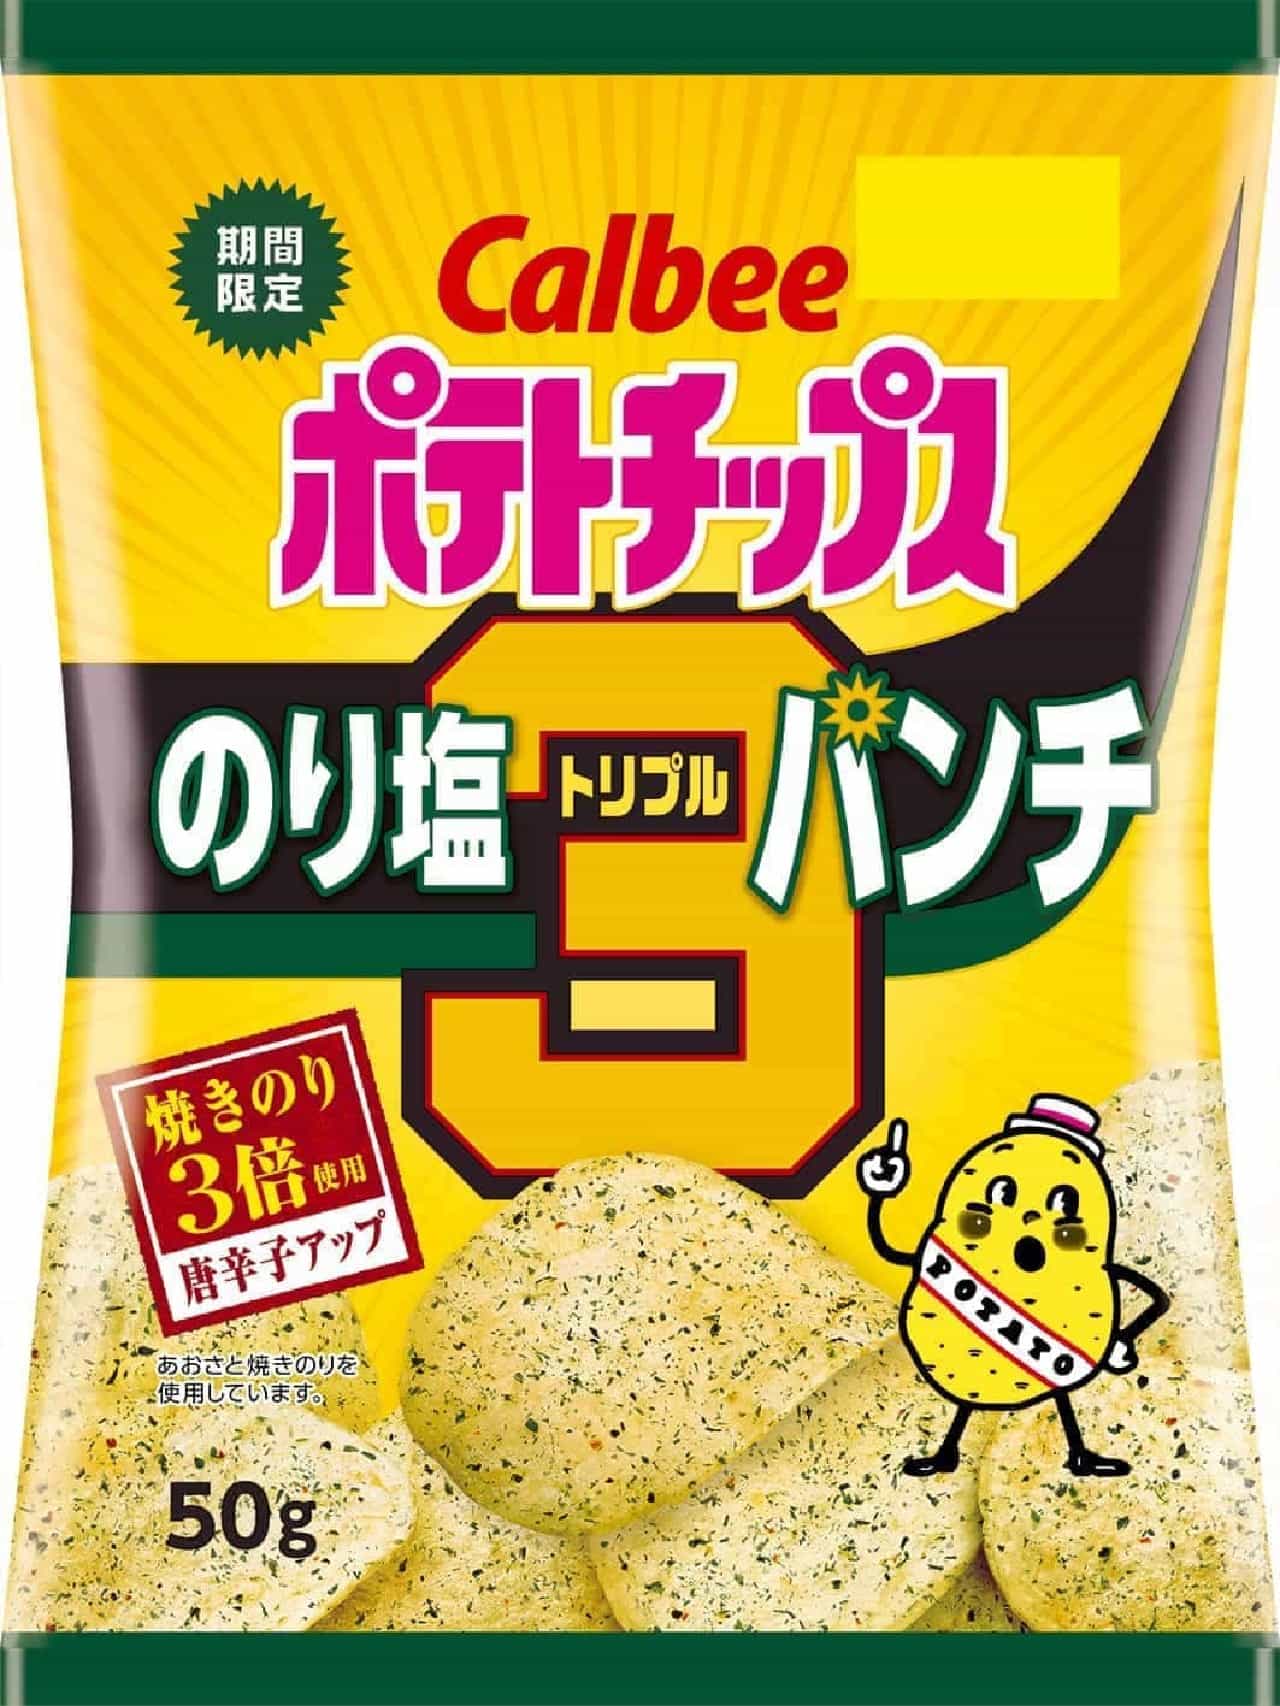 Calbee "Potato Chips Nori Salt Triple Punch"